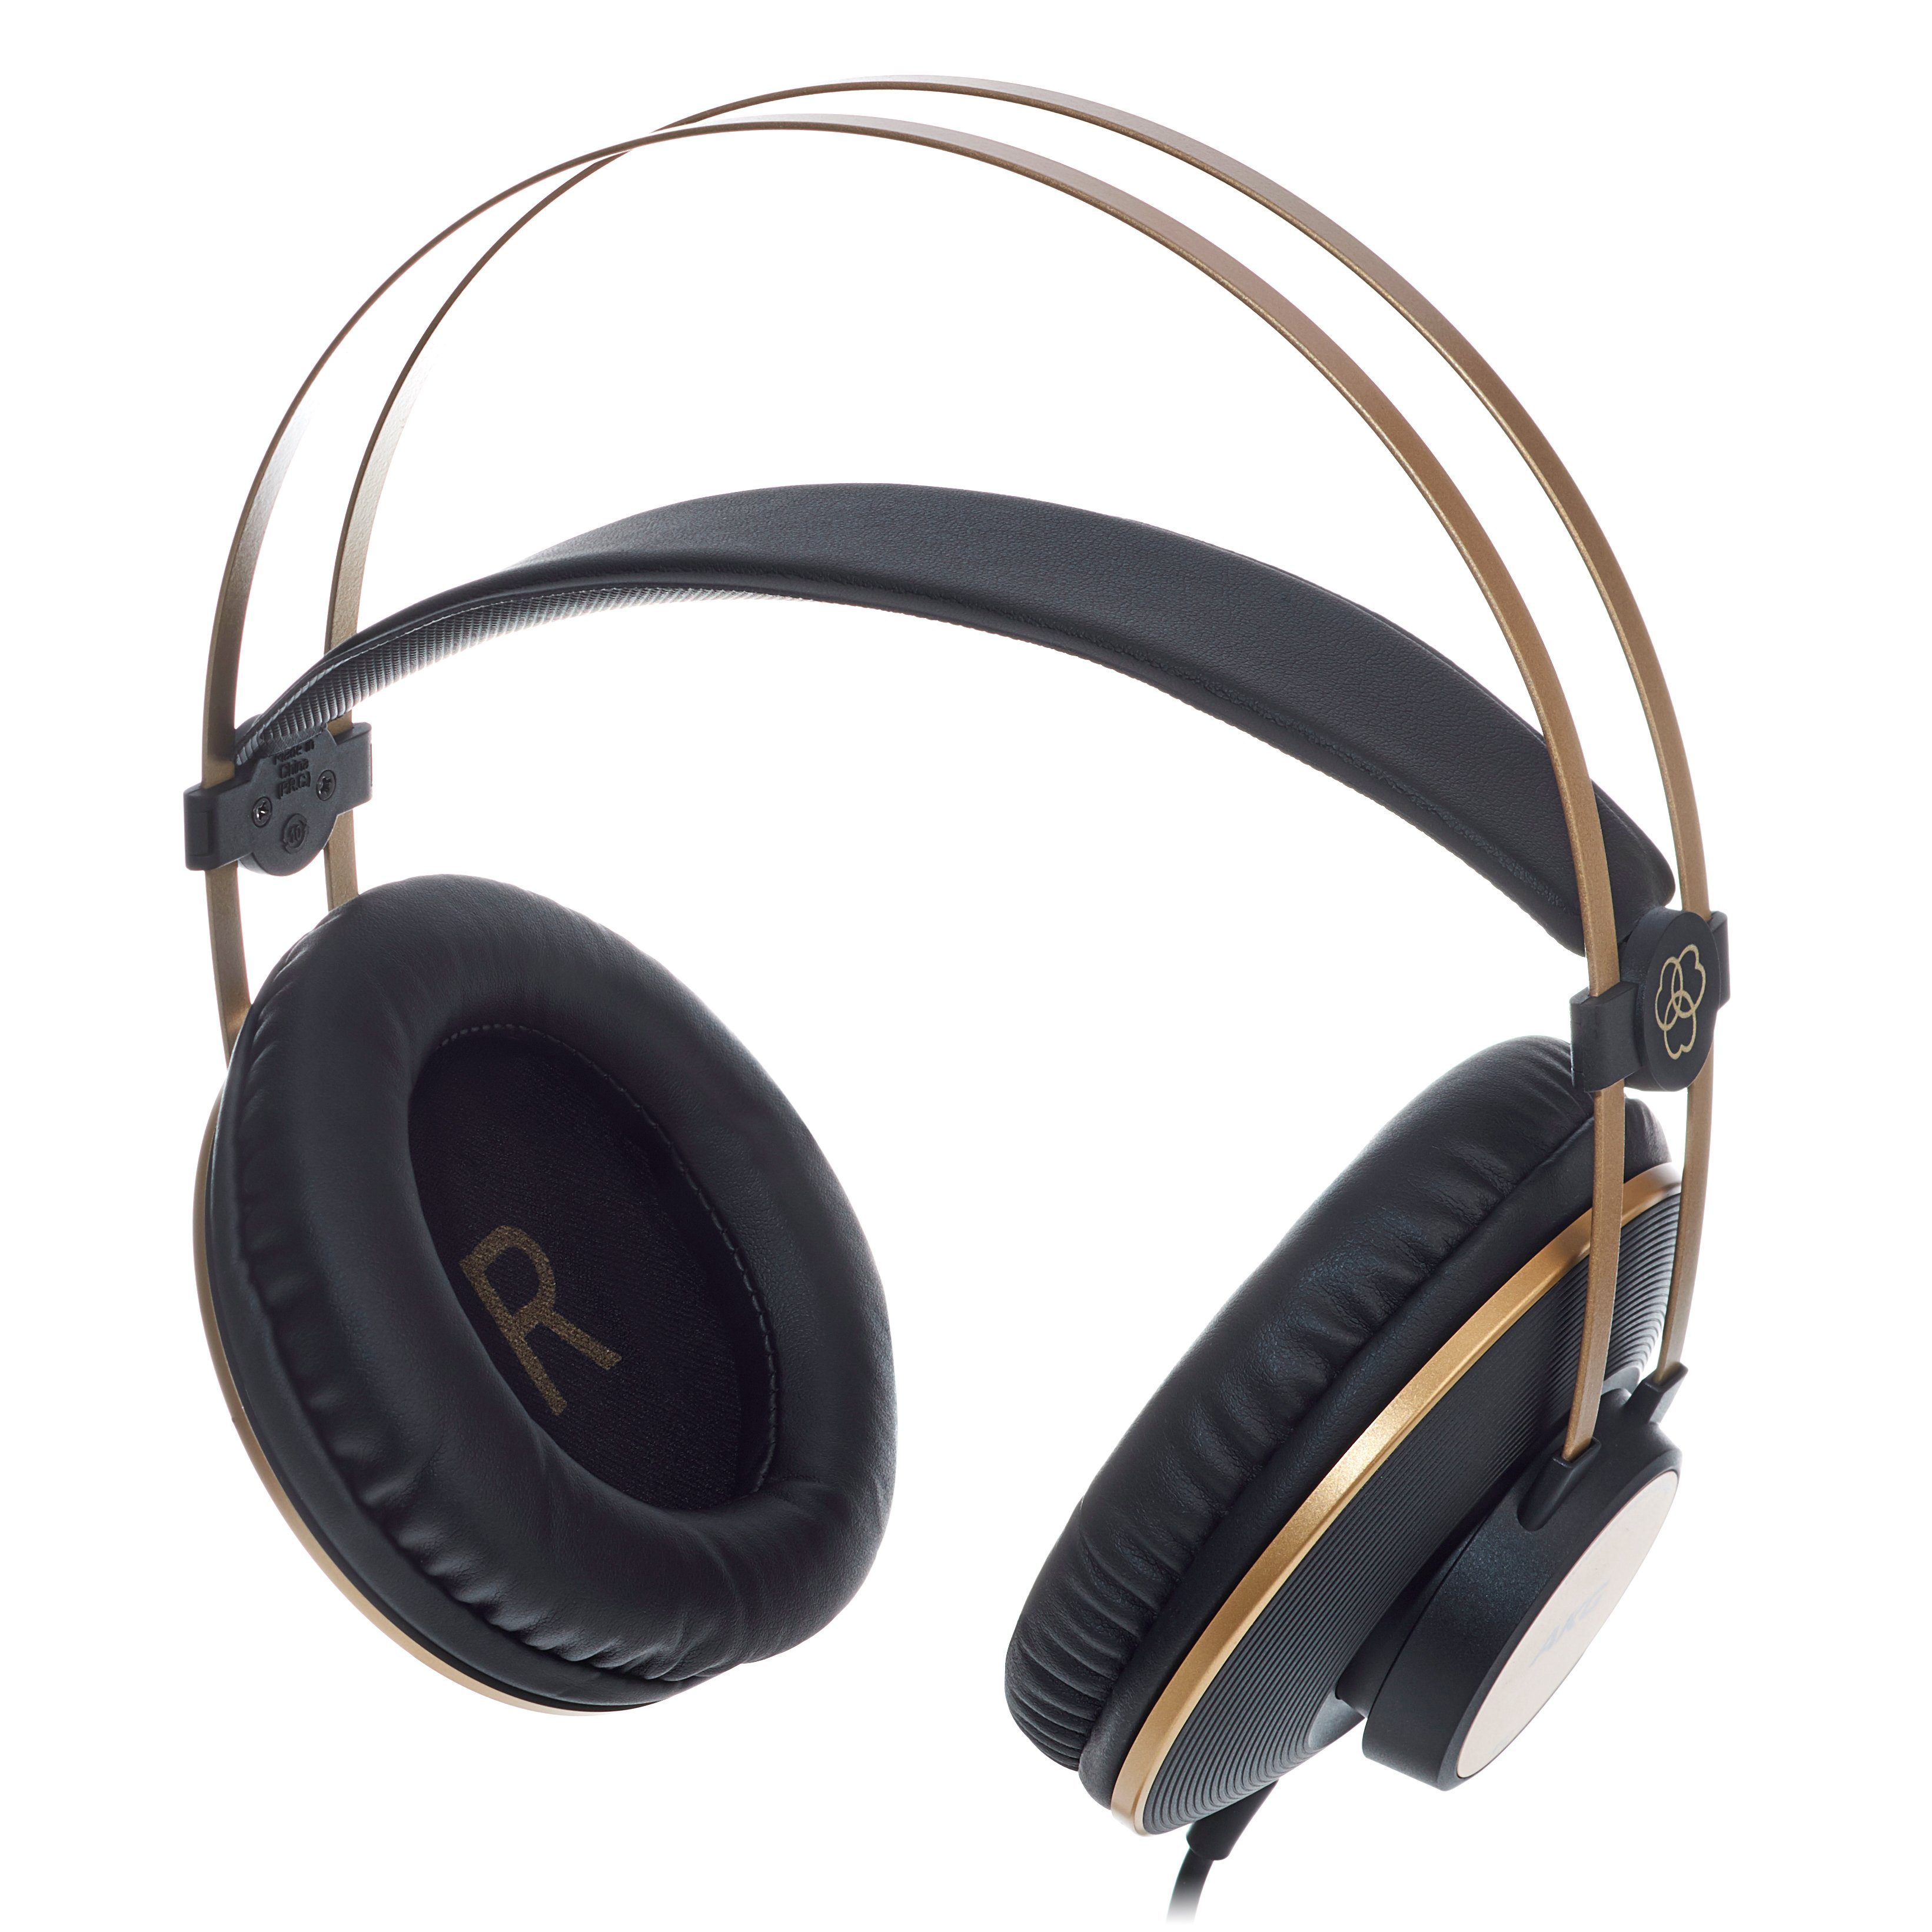 AKG K92 Closed-Back Over-Ear Studio Headphones